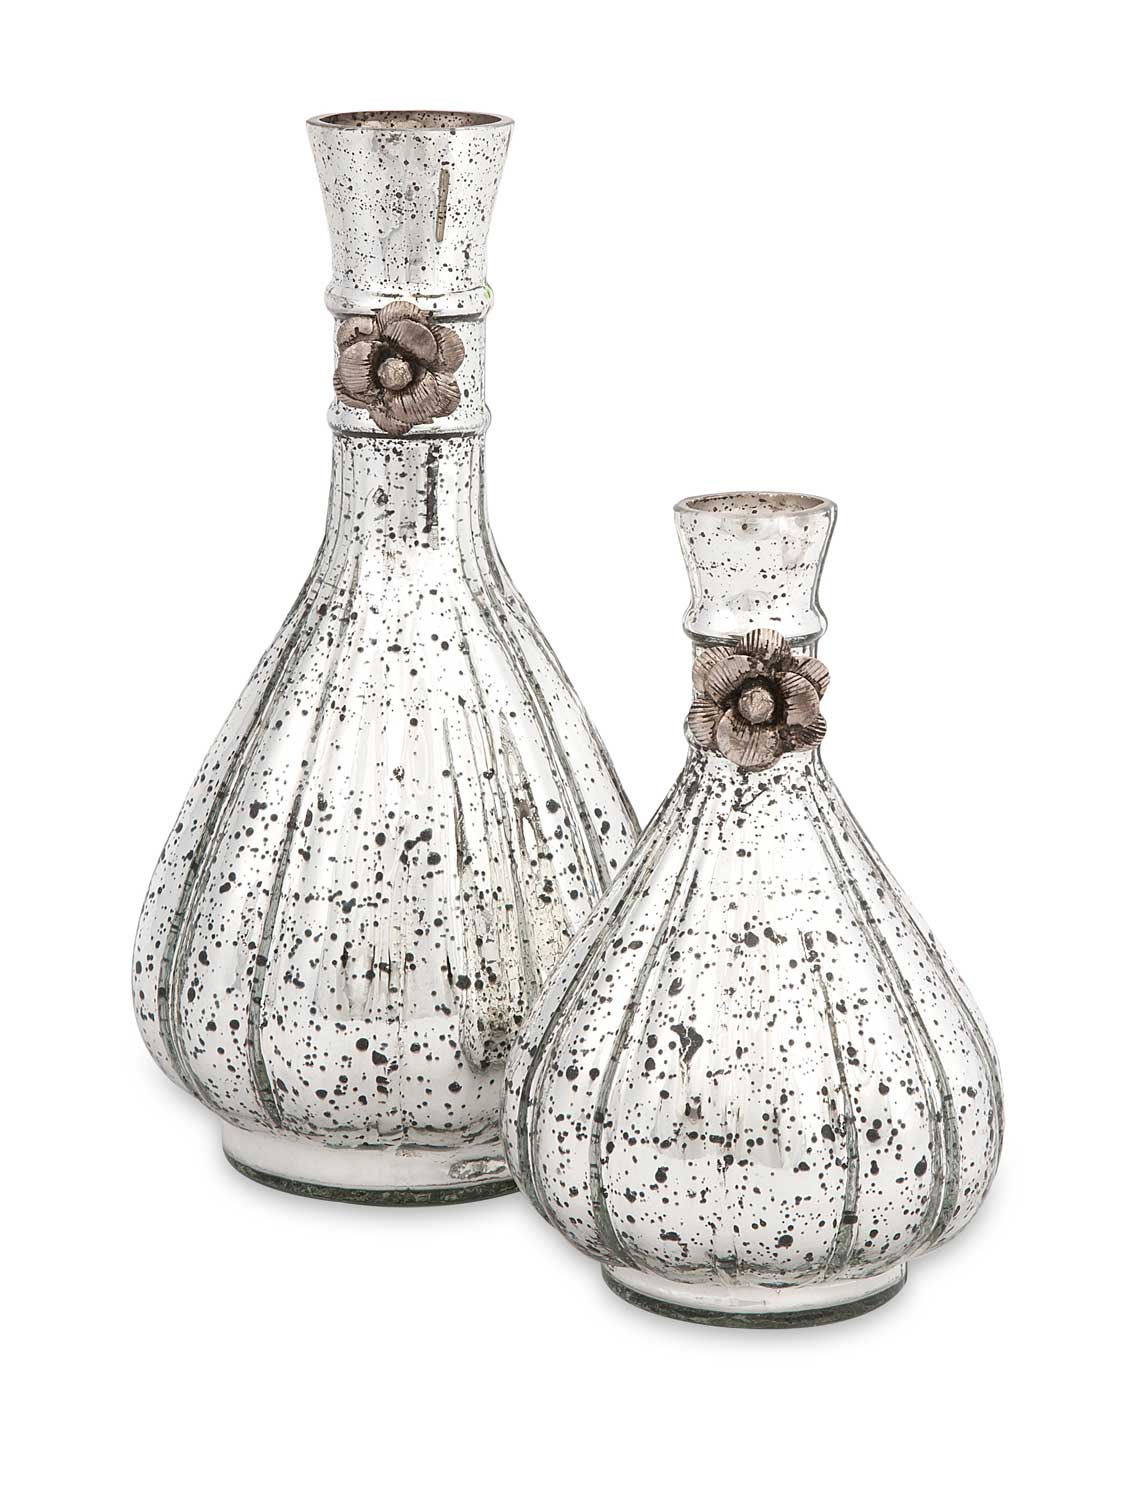 IMAX Gabrielle Glass Bottles - Set of 2